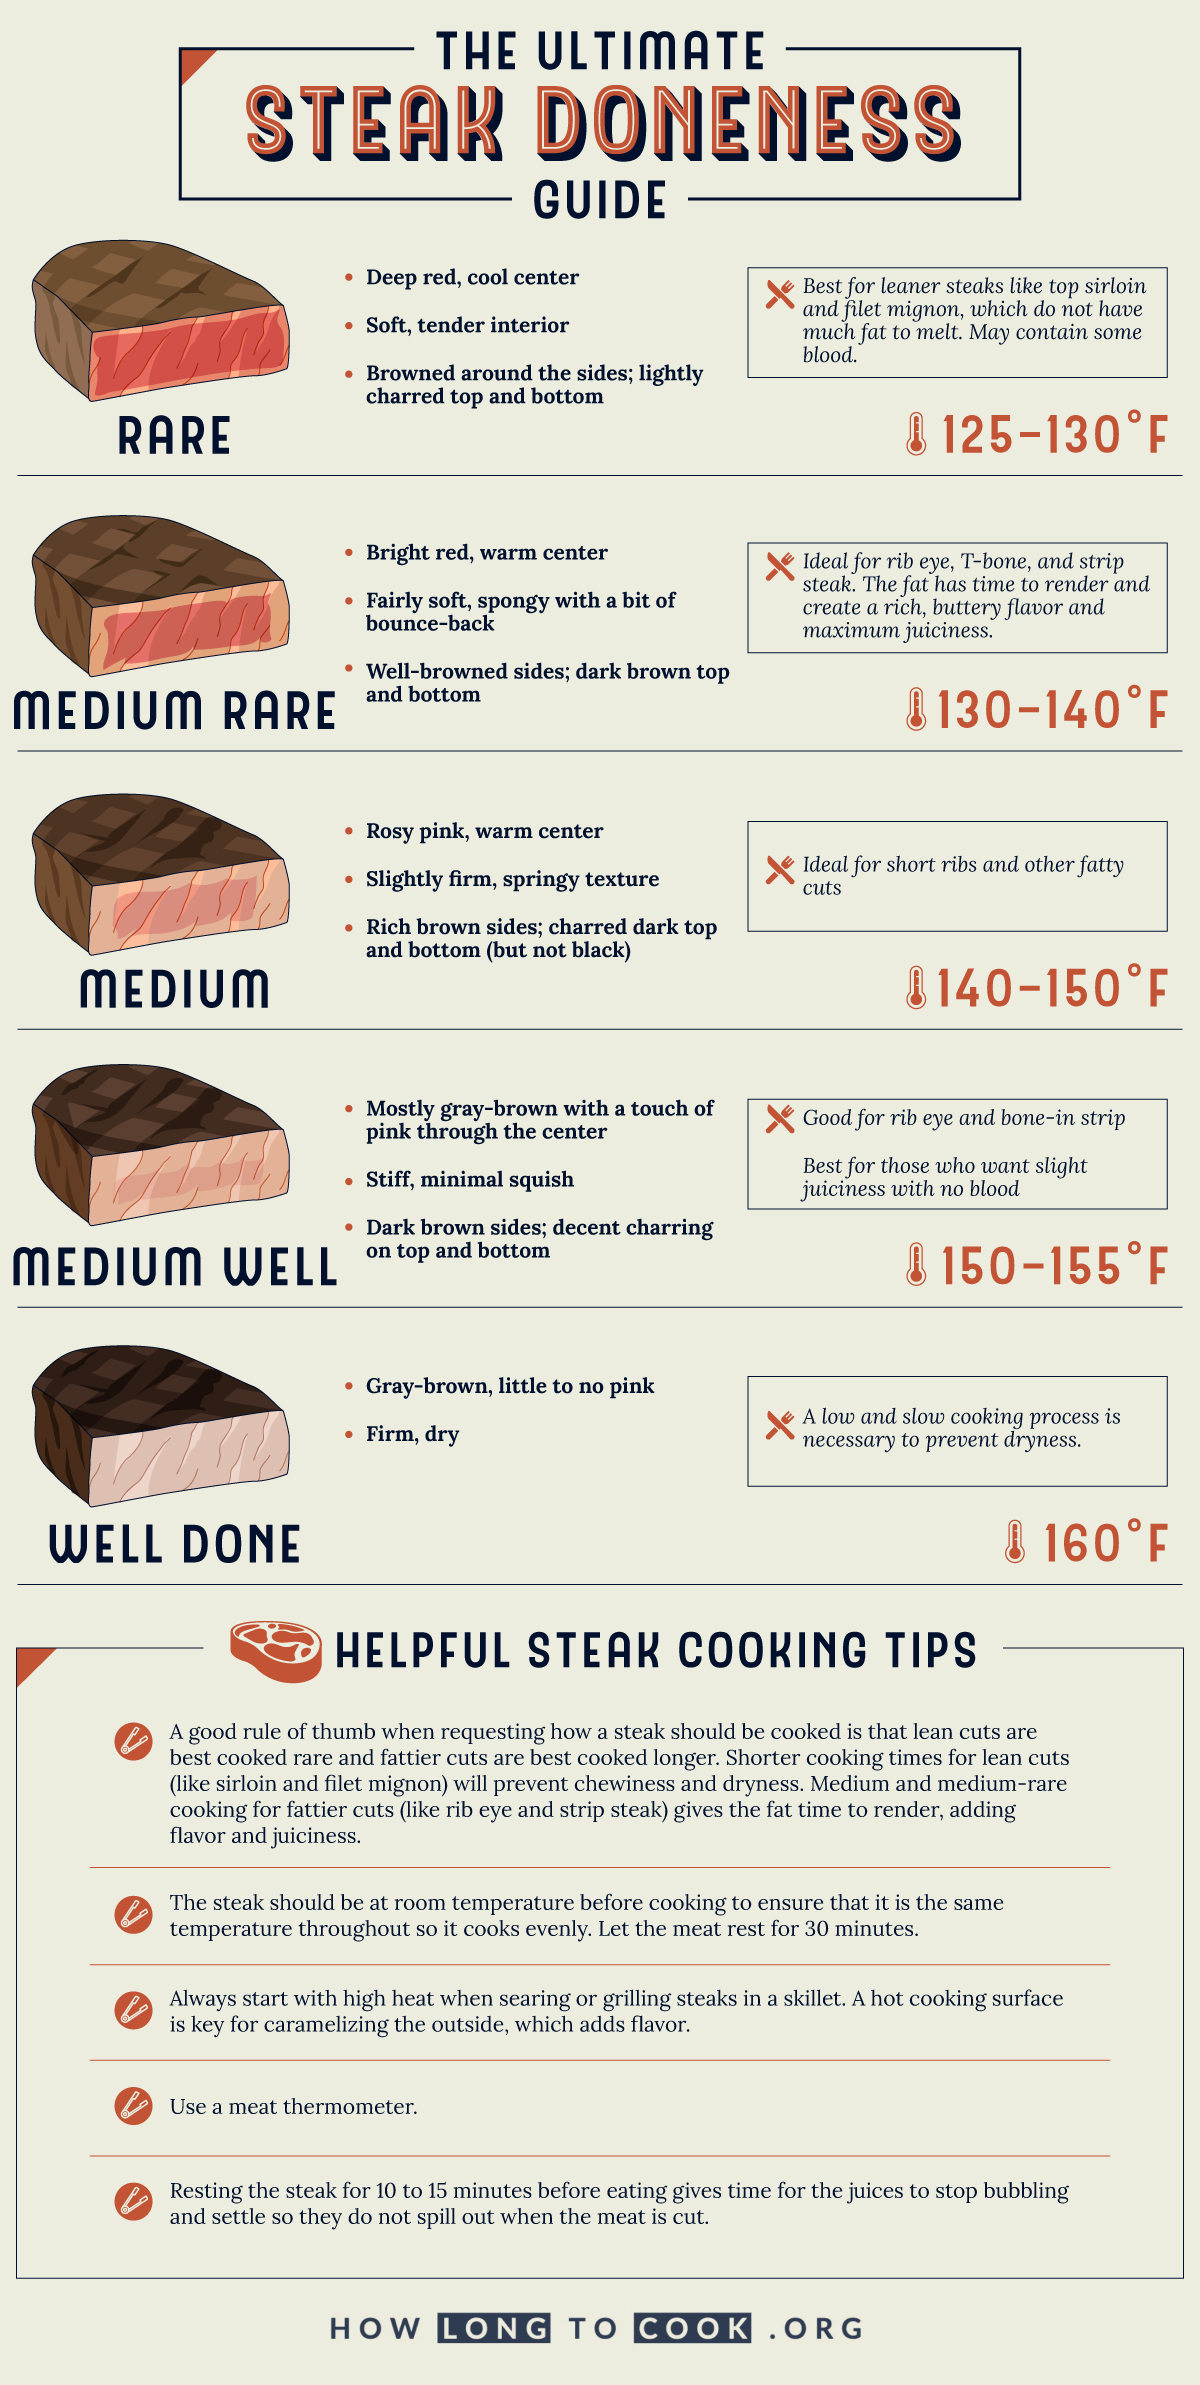 II. Choosing the Right Cut of Steak: